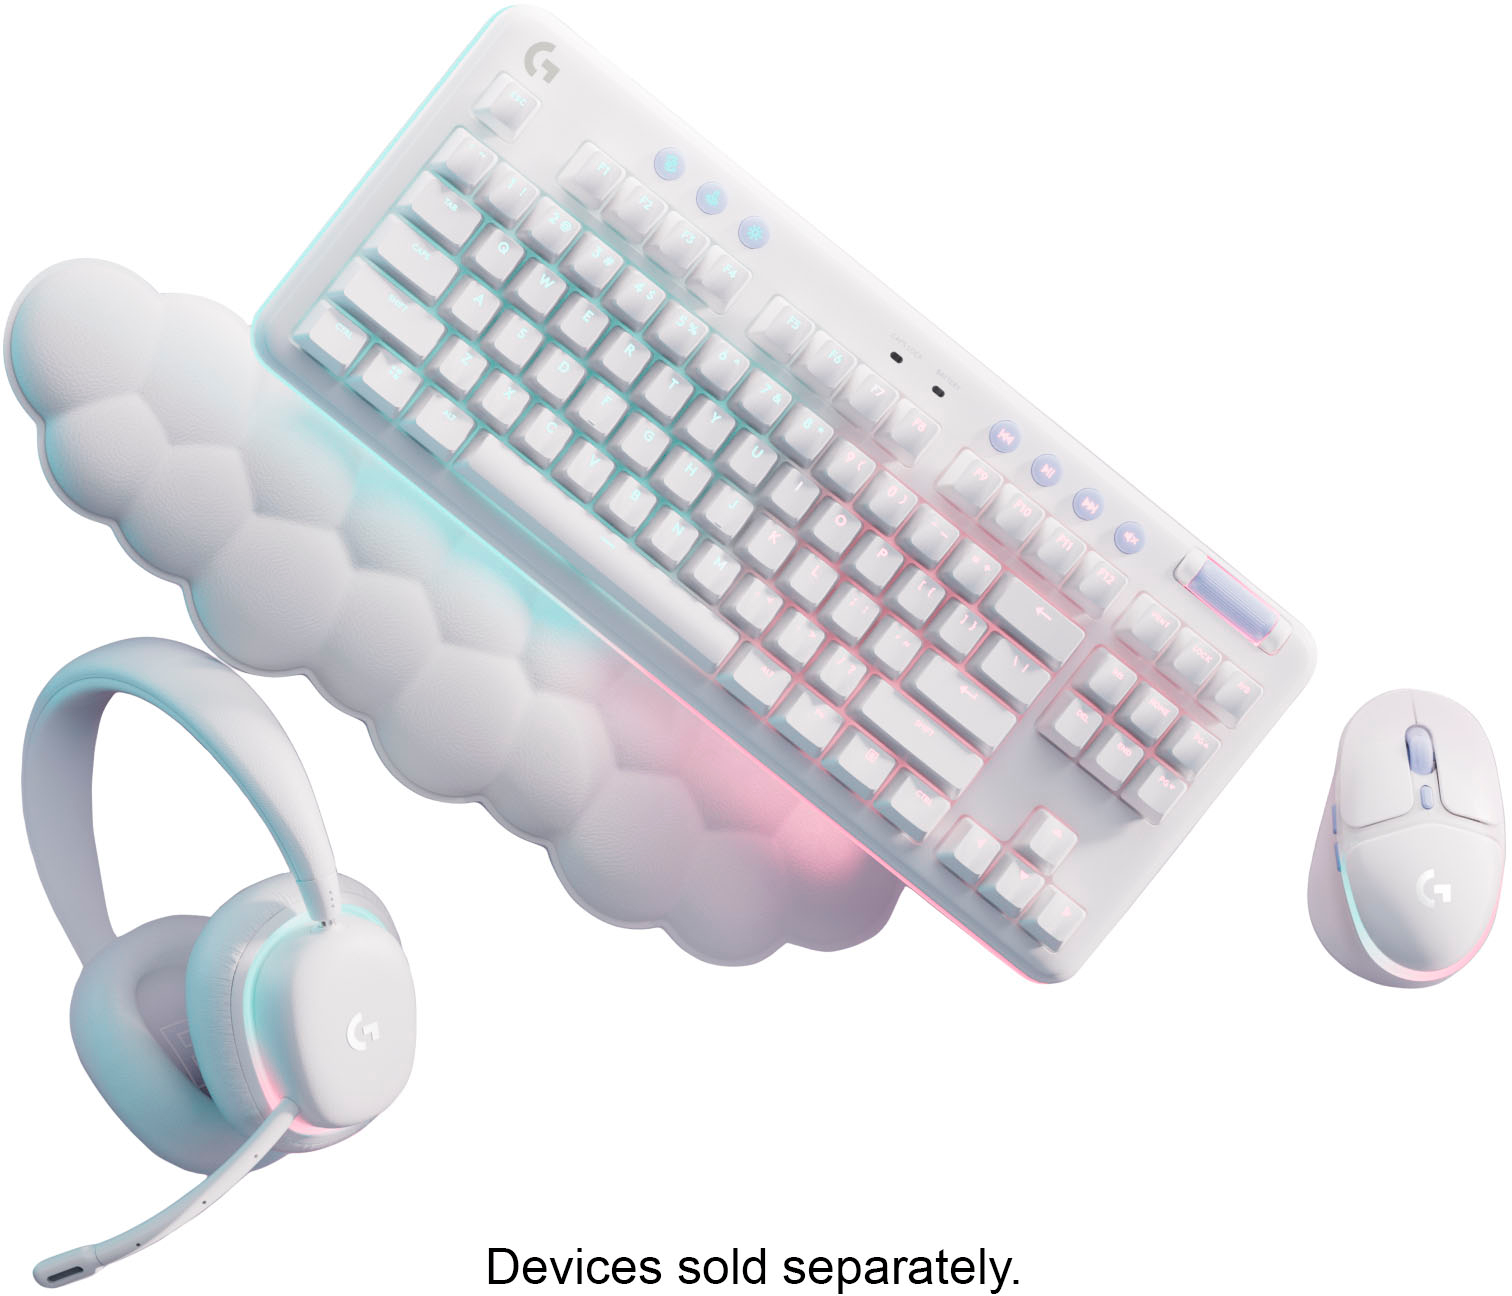 Logitech G735 Wireless Gaming Headset + G715 Wireless Mechanical Gaming  Keyboard Tactile - White Mist